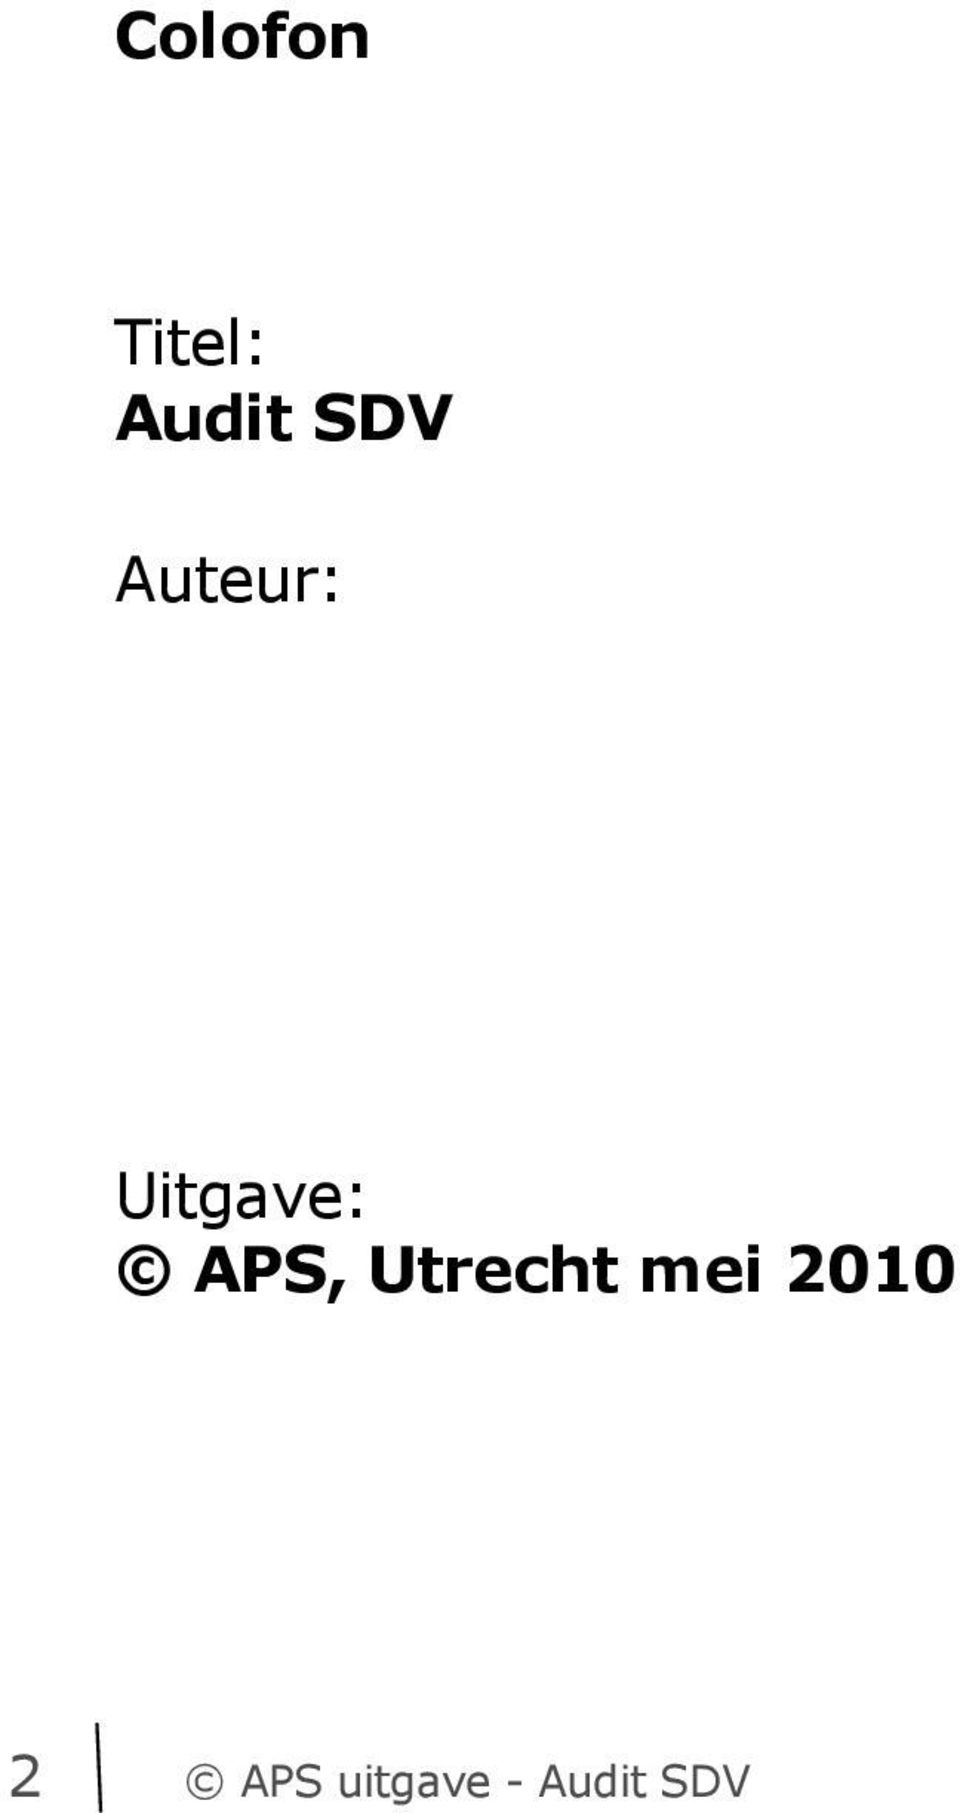 APS, Utrecht mei 2010